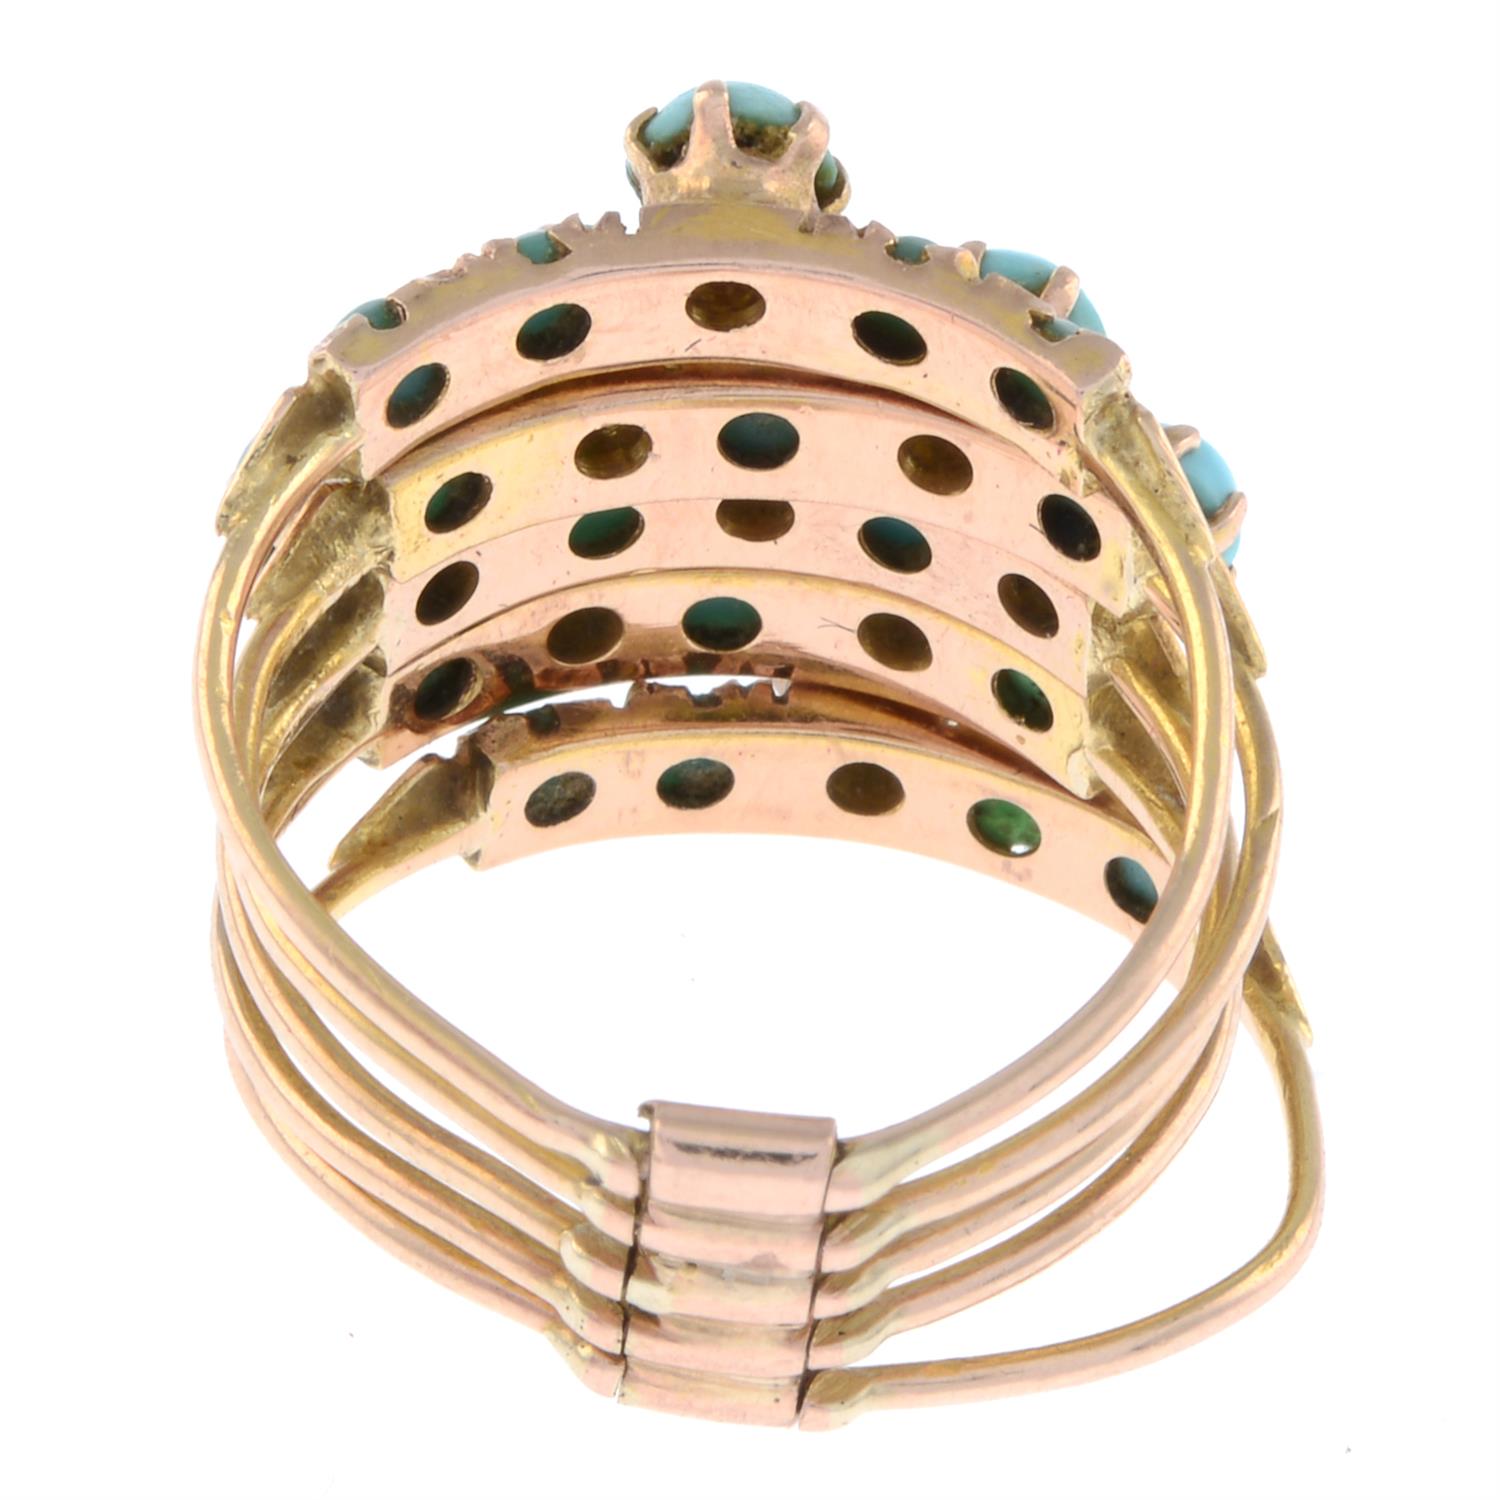 Turquoise multi-band ring - Image 2 of 2